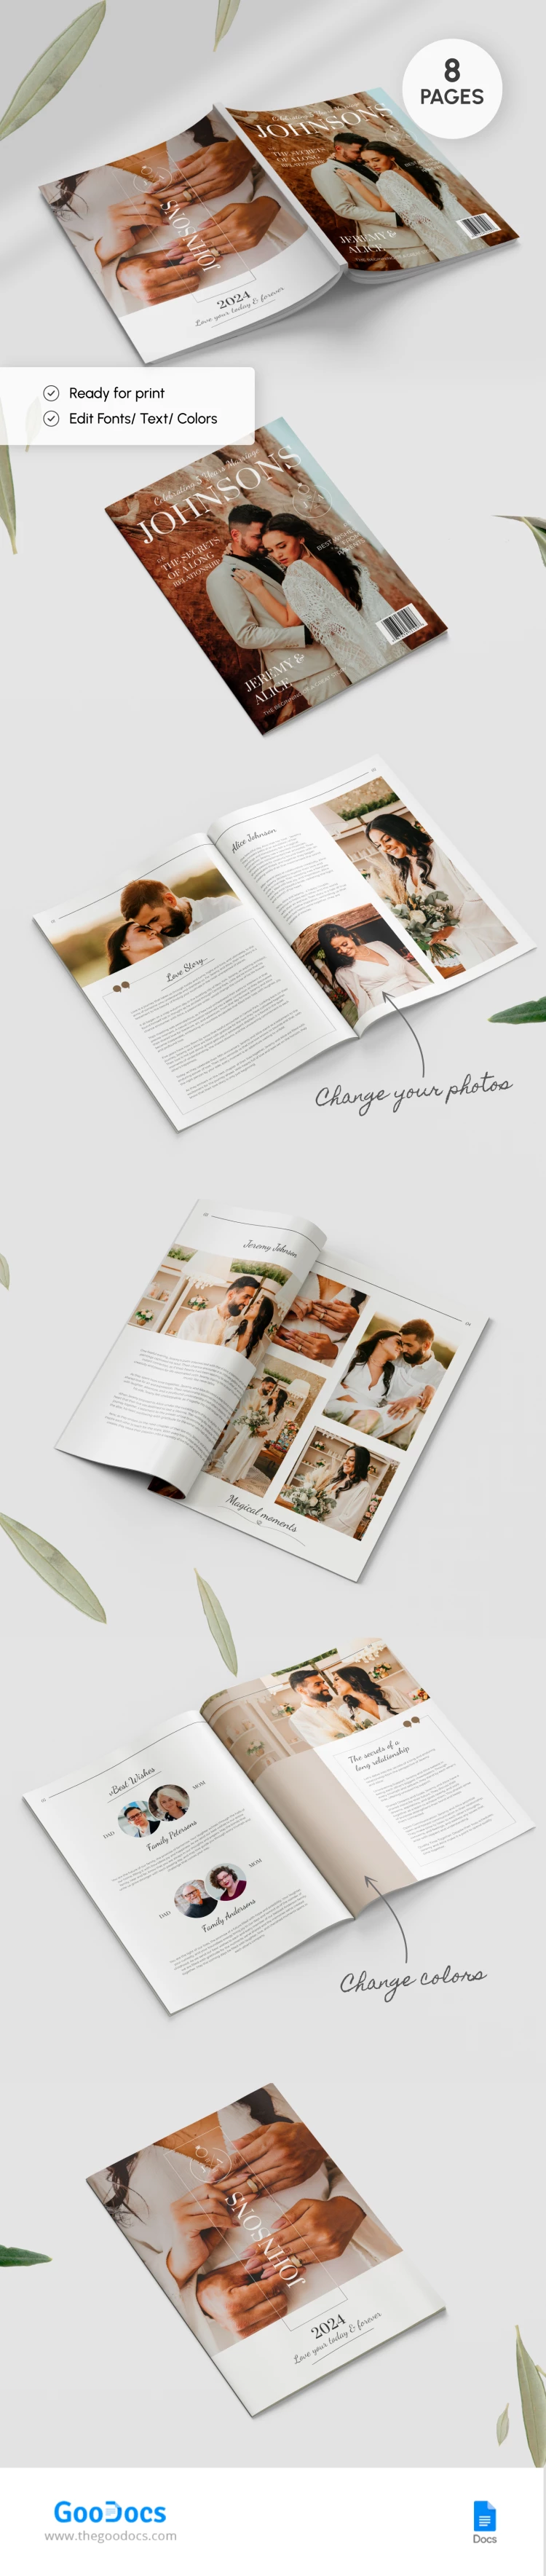 Wedding Magazine - free Google Docs Template - 10068697